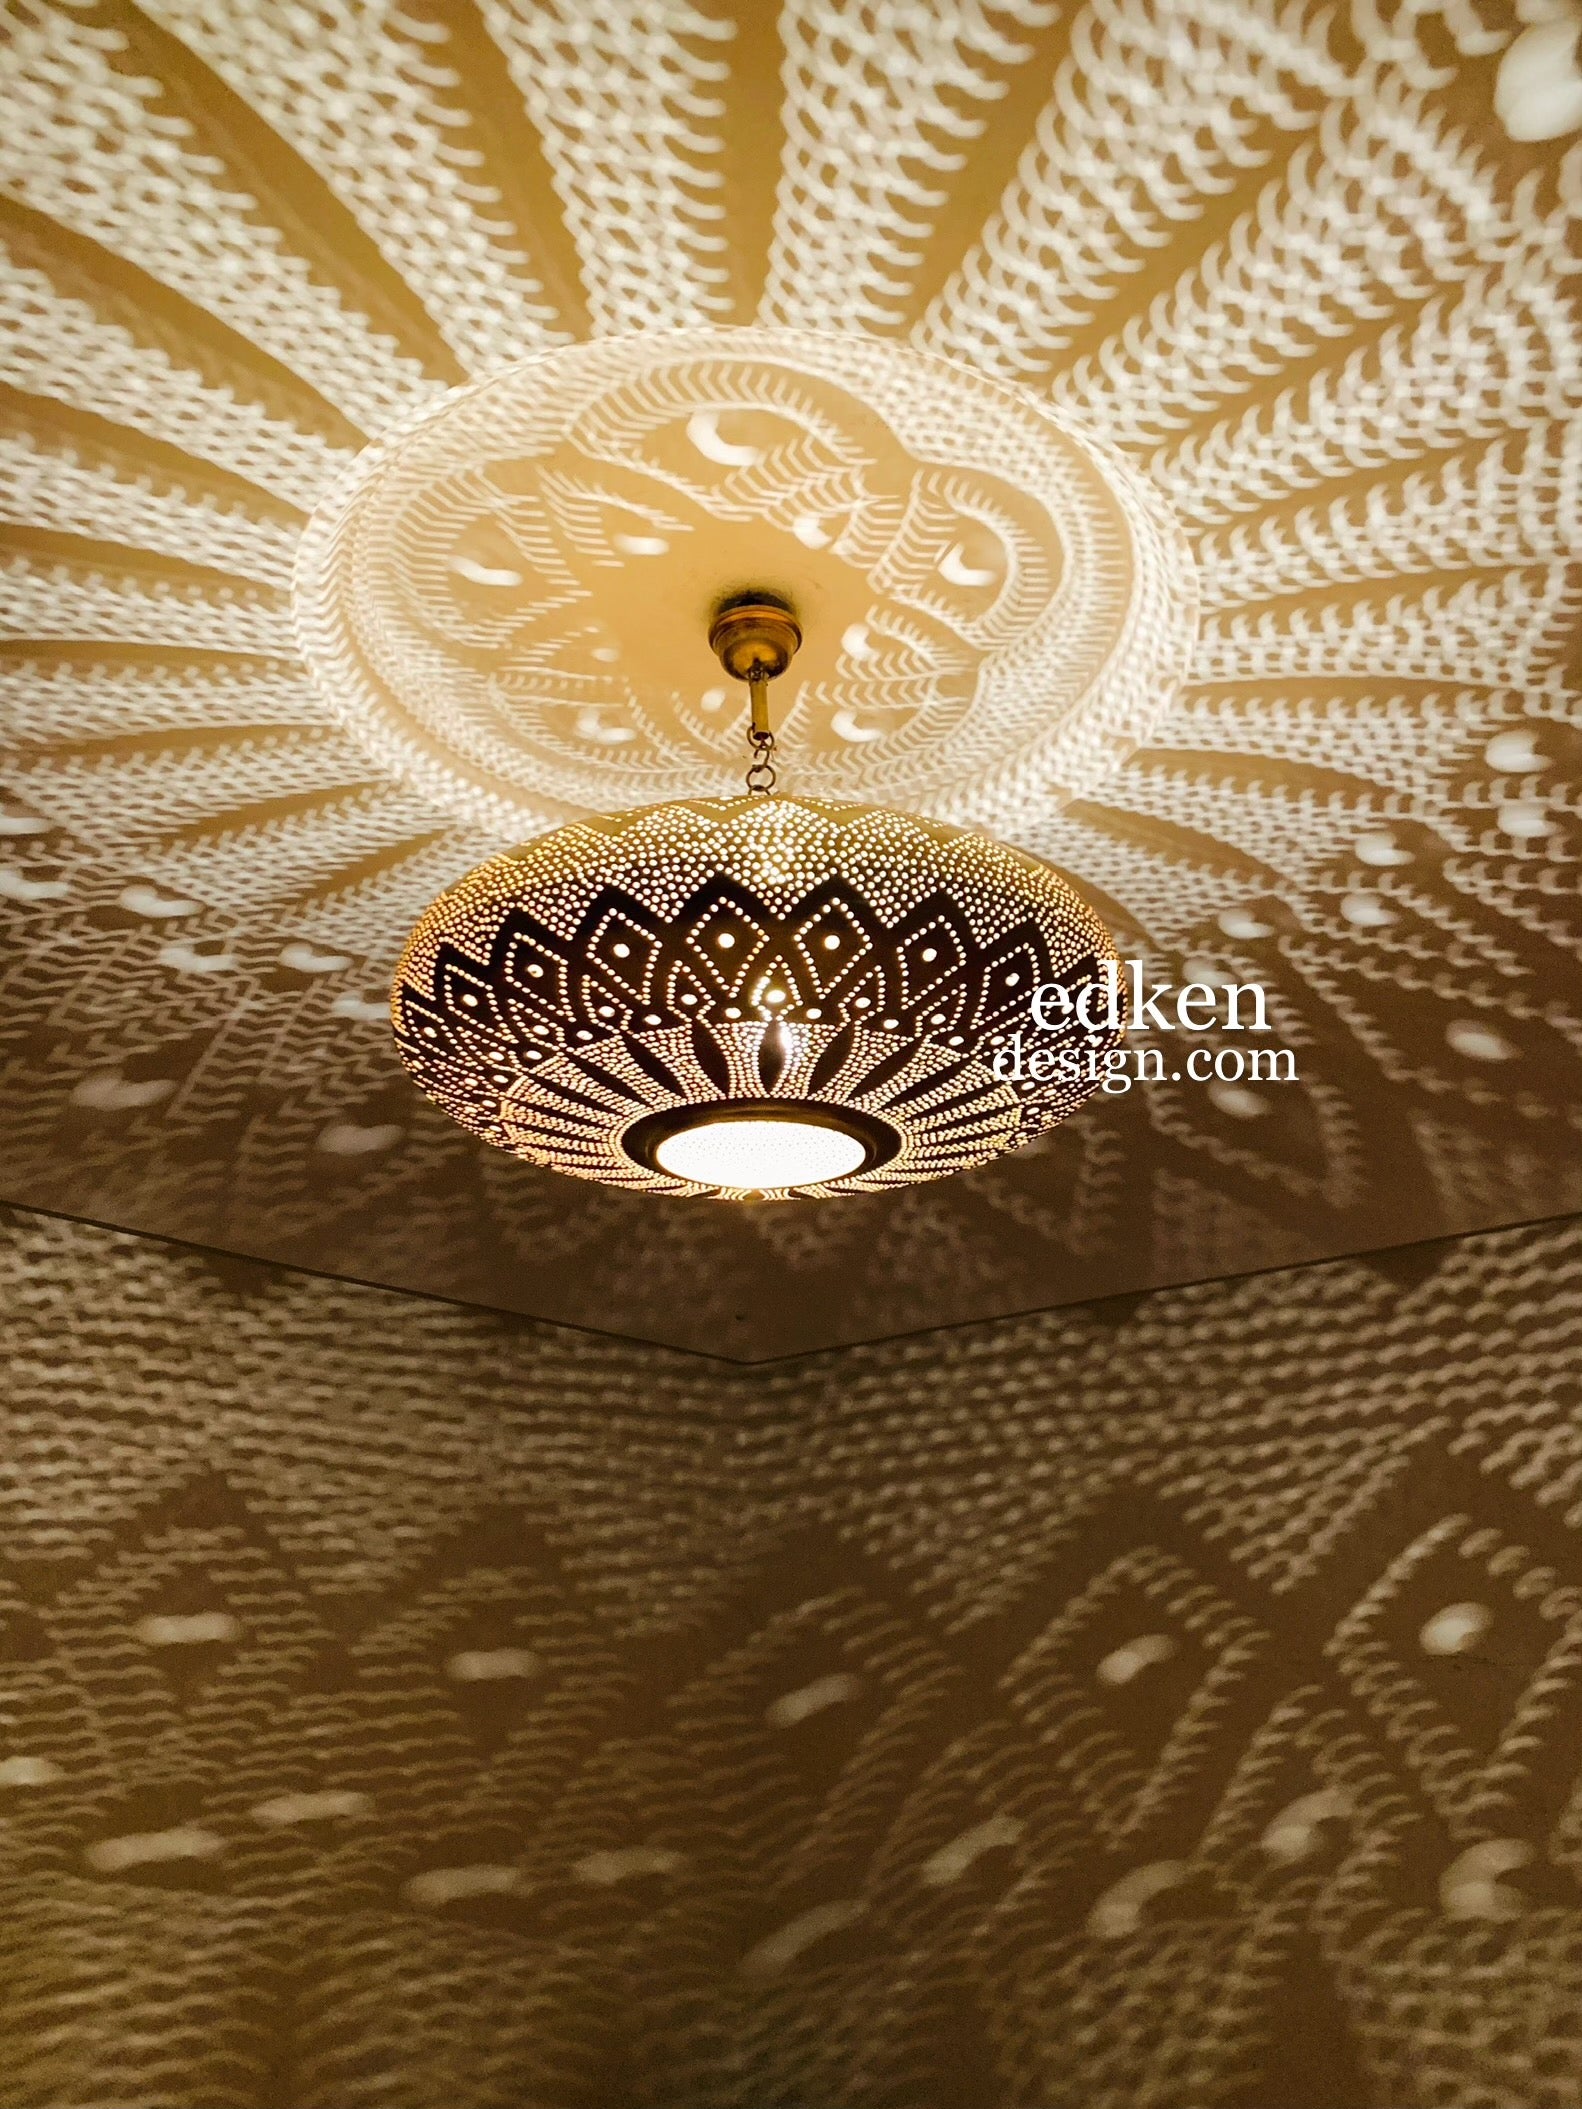 EDKEN LIGHTS - Close view Morocco Ceiling Lamp Shades Fixture pierced Brass Lozenge Hanging Lights Handmade Brass Morocco Home Decor Lighting